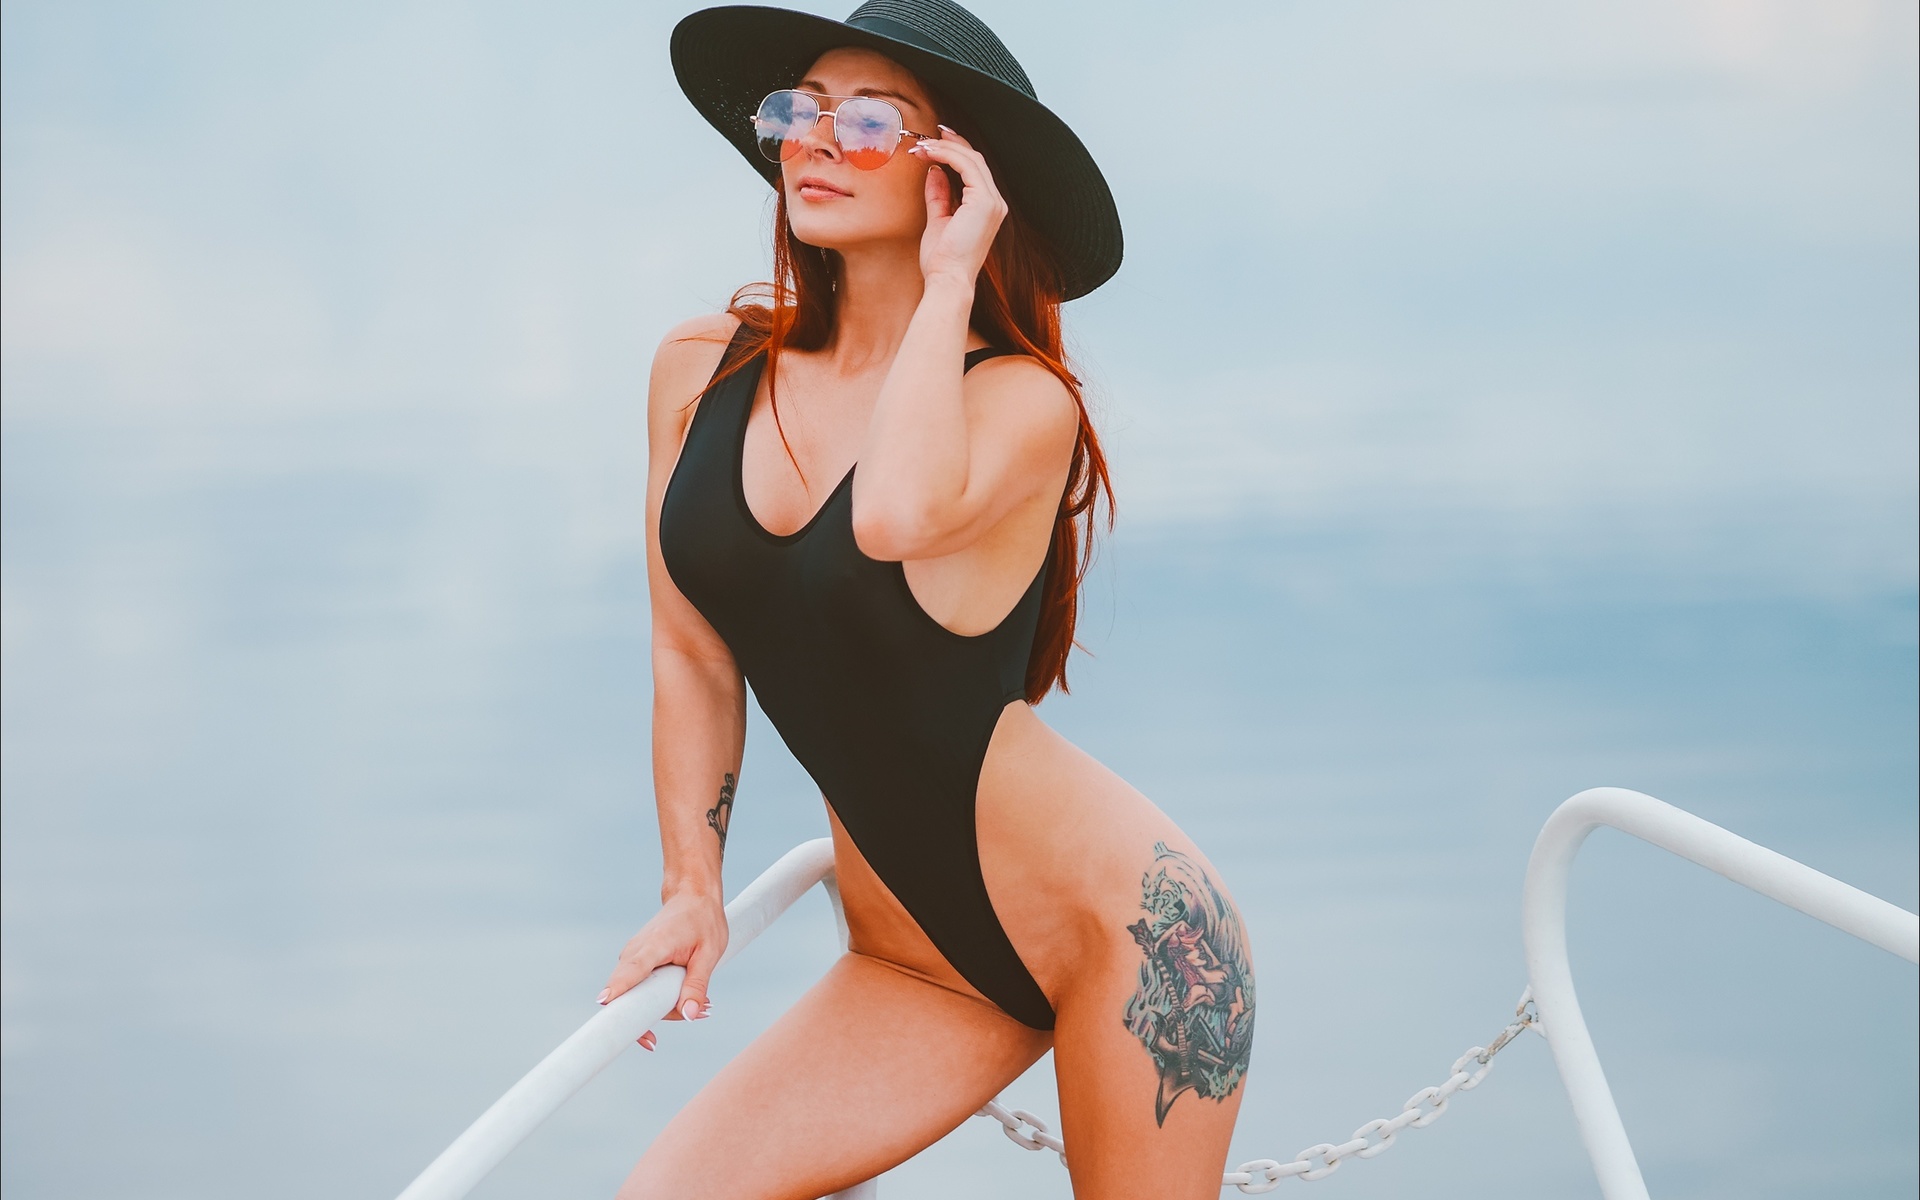 lelka serdyukova, swimwear, women, model, redhead, tattoo, hat, boat, sunglasses, sea, sky